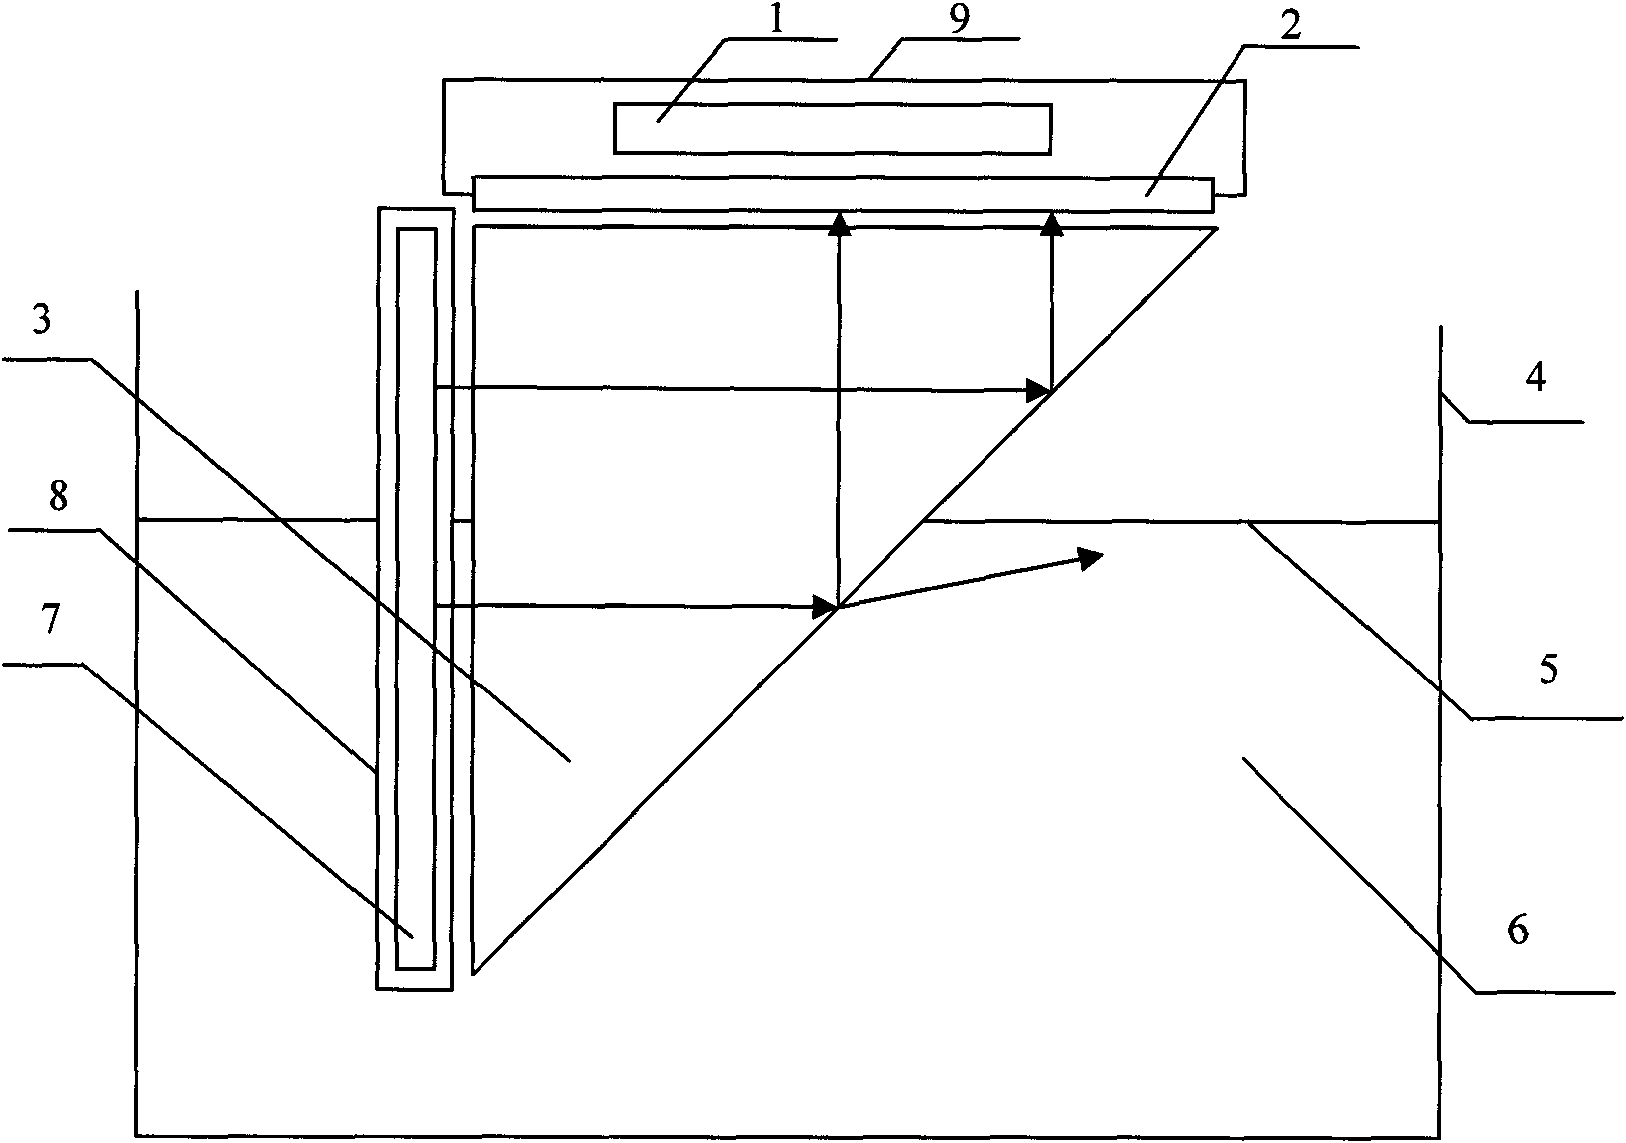 Liquid level measuring method and device based on isosceles right triangular prism